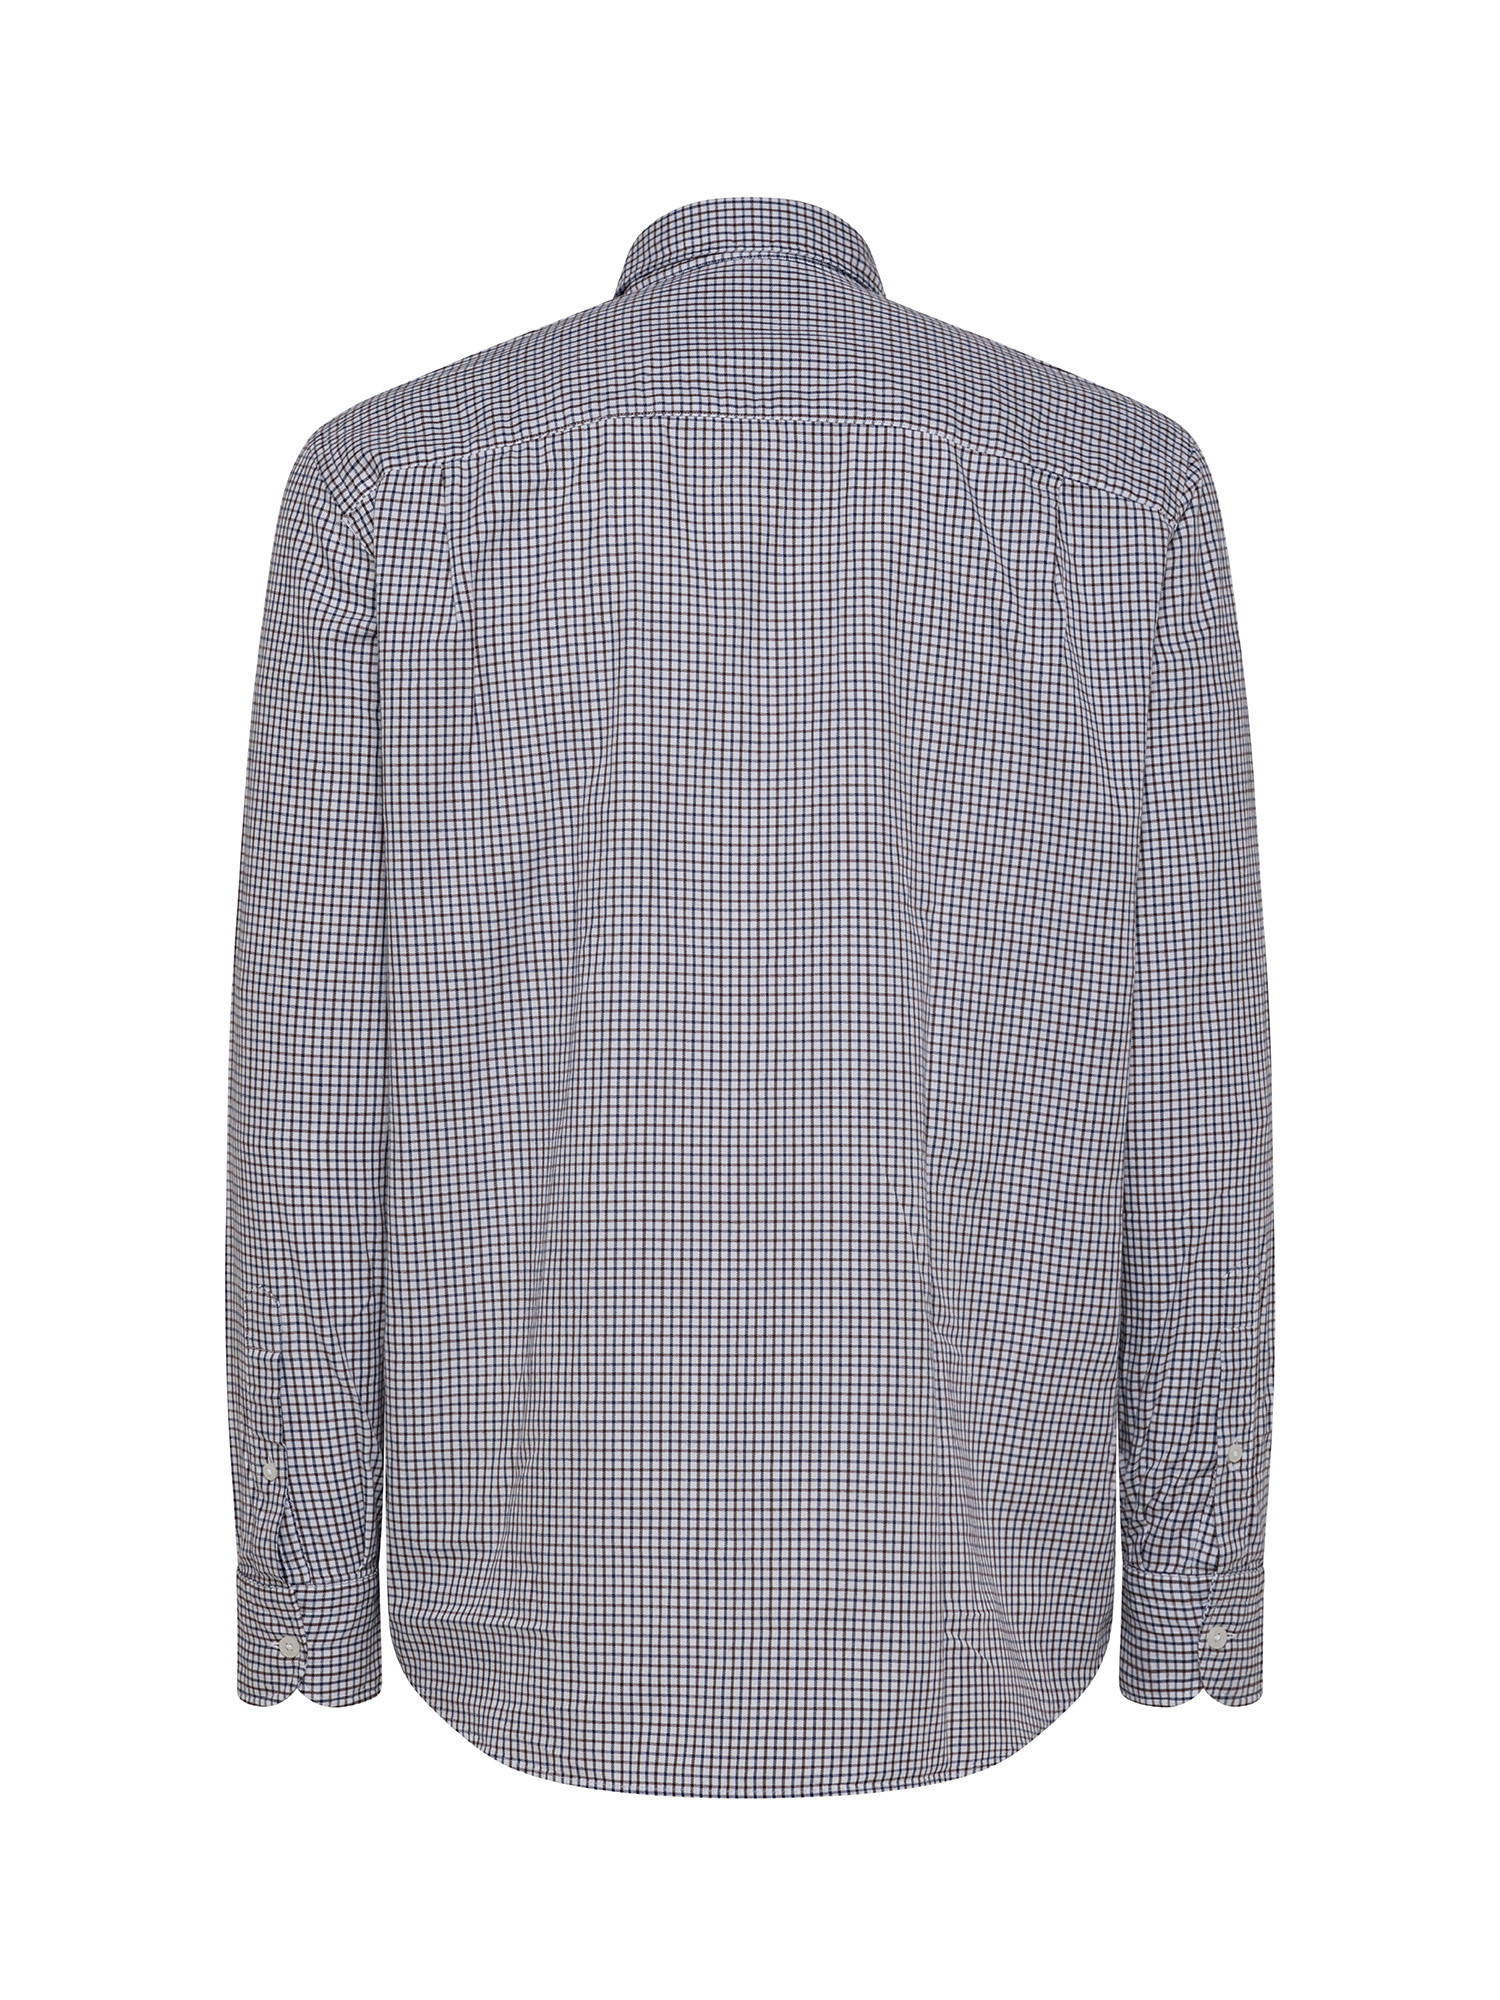 Camicia regular fit in morbida flanella di cotone organico, Blu, large image number 1